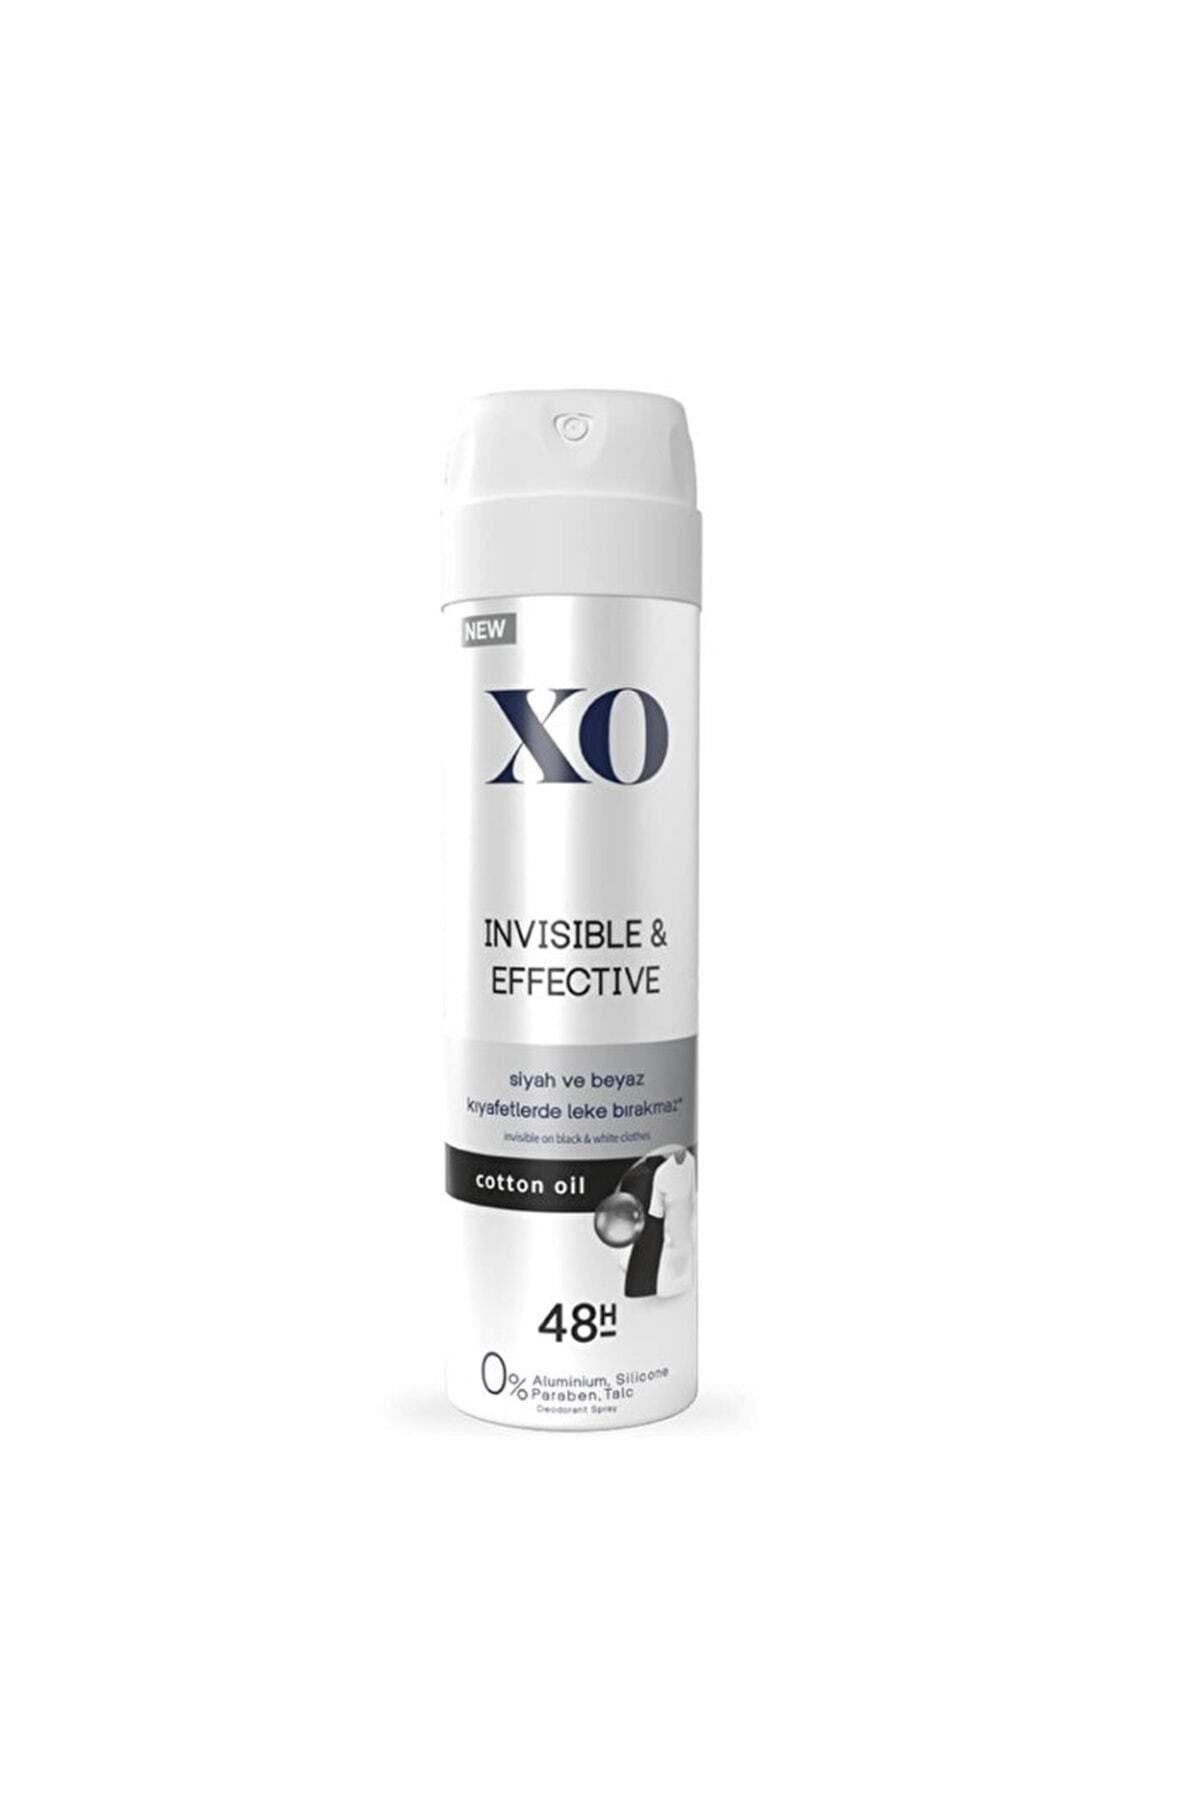 Xo Invisible Effective Women Deodorant 150 ml